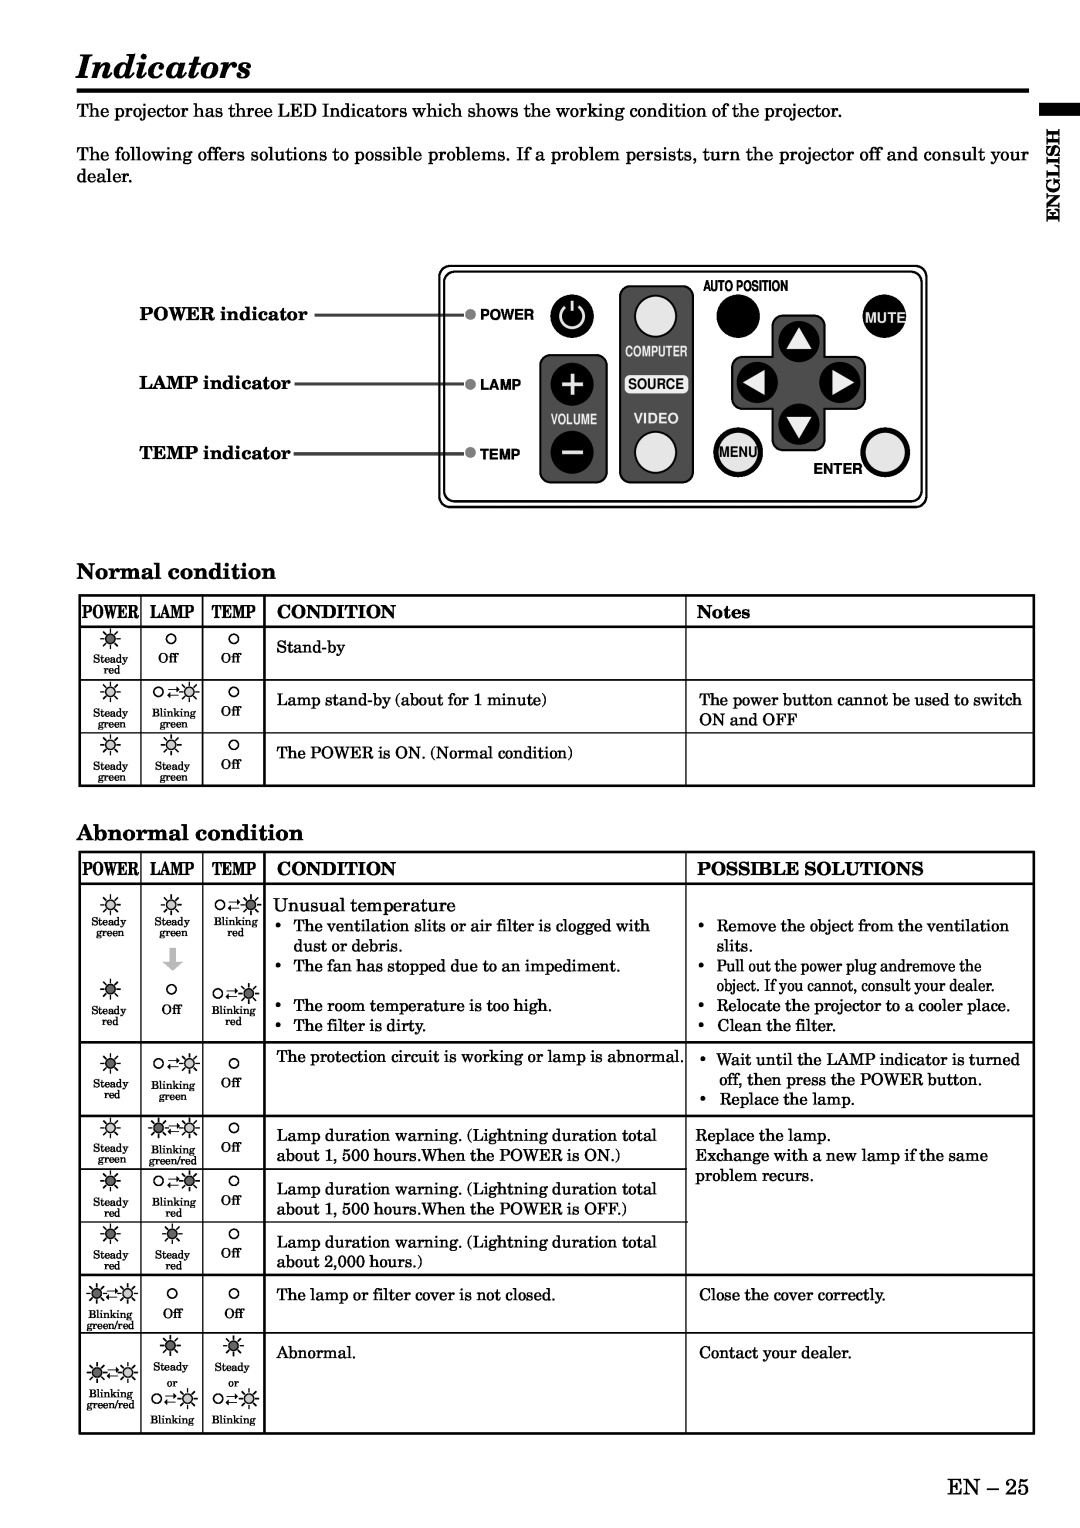 Mitsubishi Electronics LVP-SA51U user manual Indicators, Normal condition, Abnormal condition 